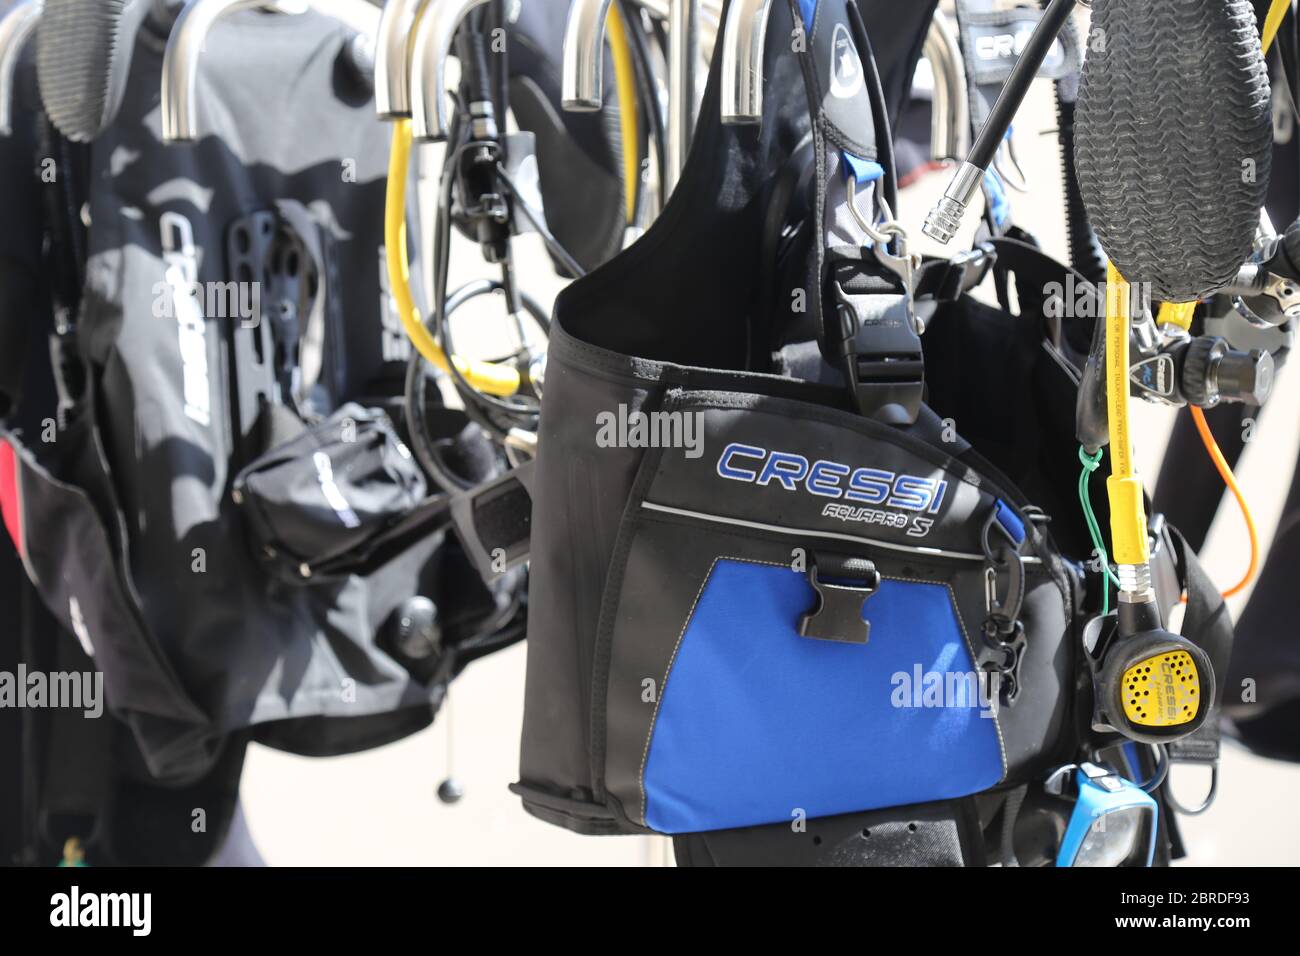 Scuba diving equipment in a diving shop, bcd and regulators Stock Photo